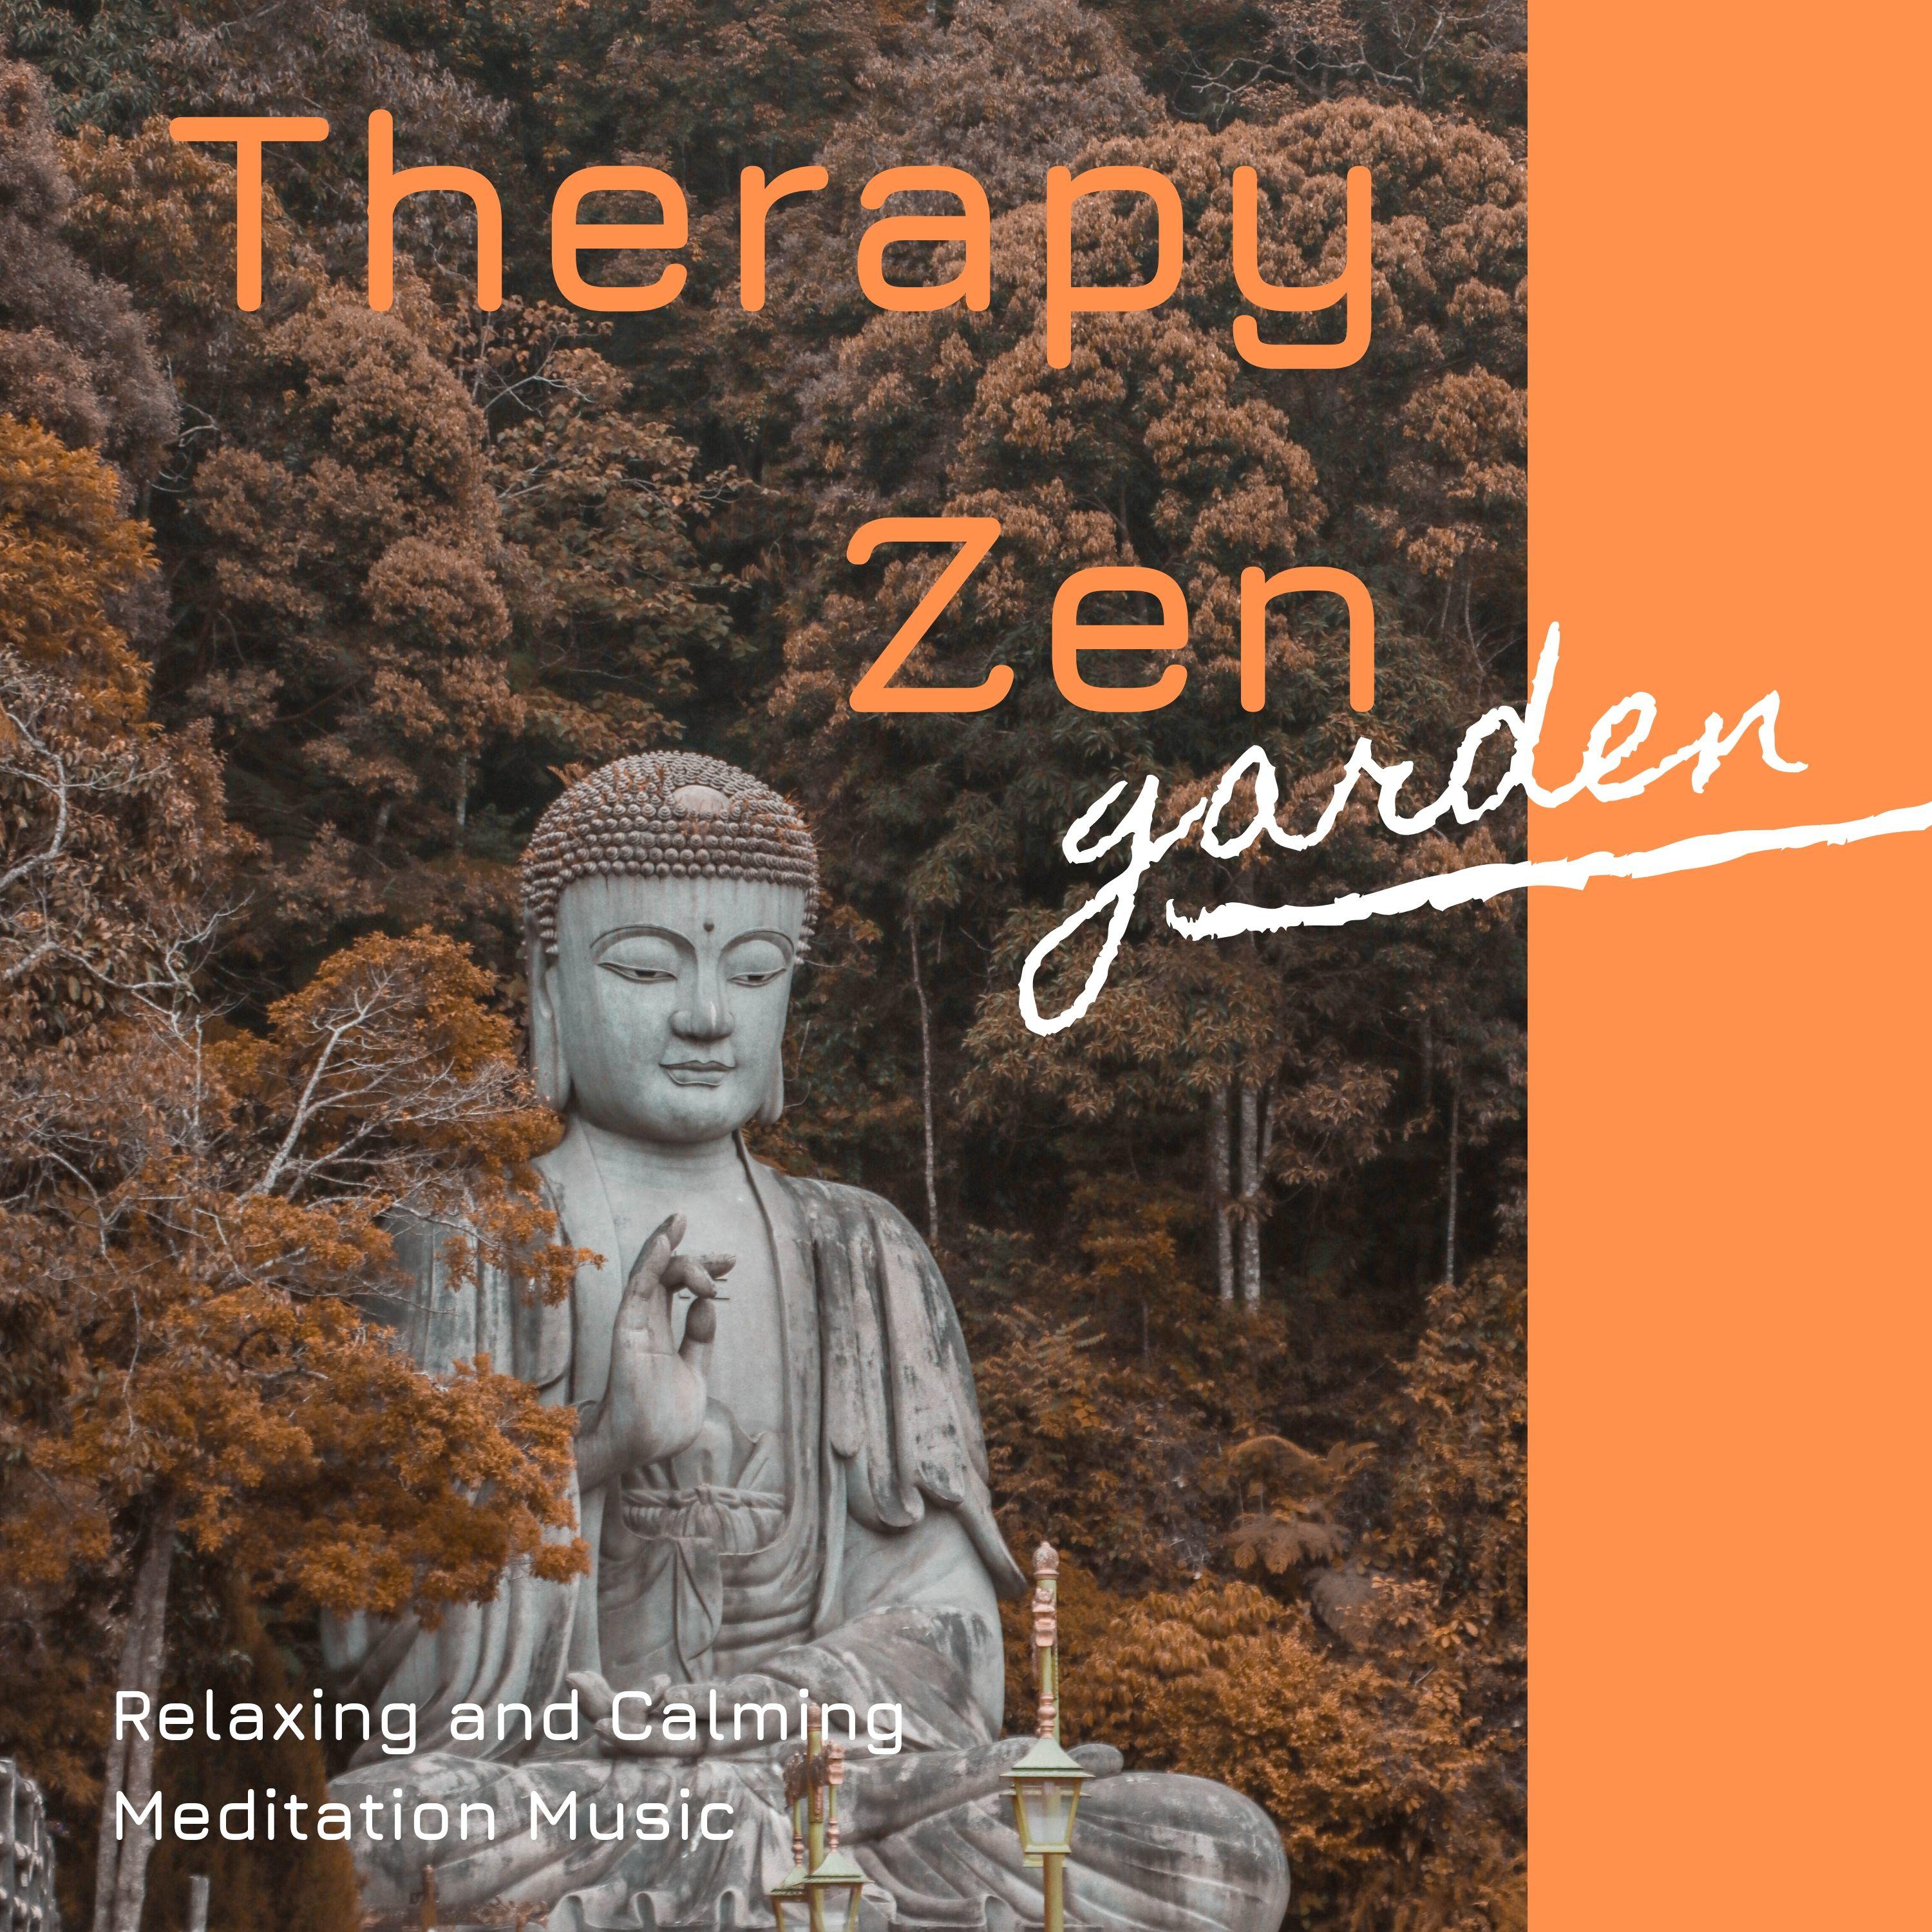 Therapy Zen Garden